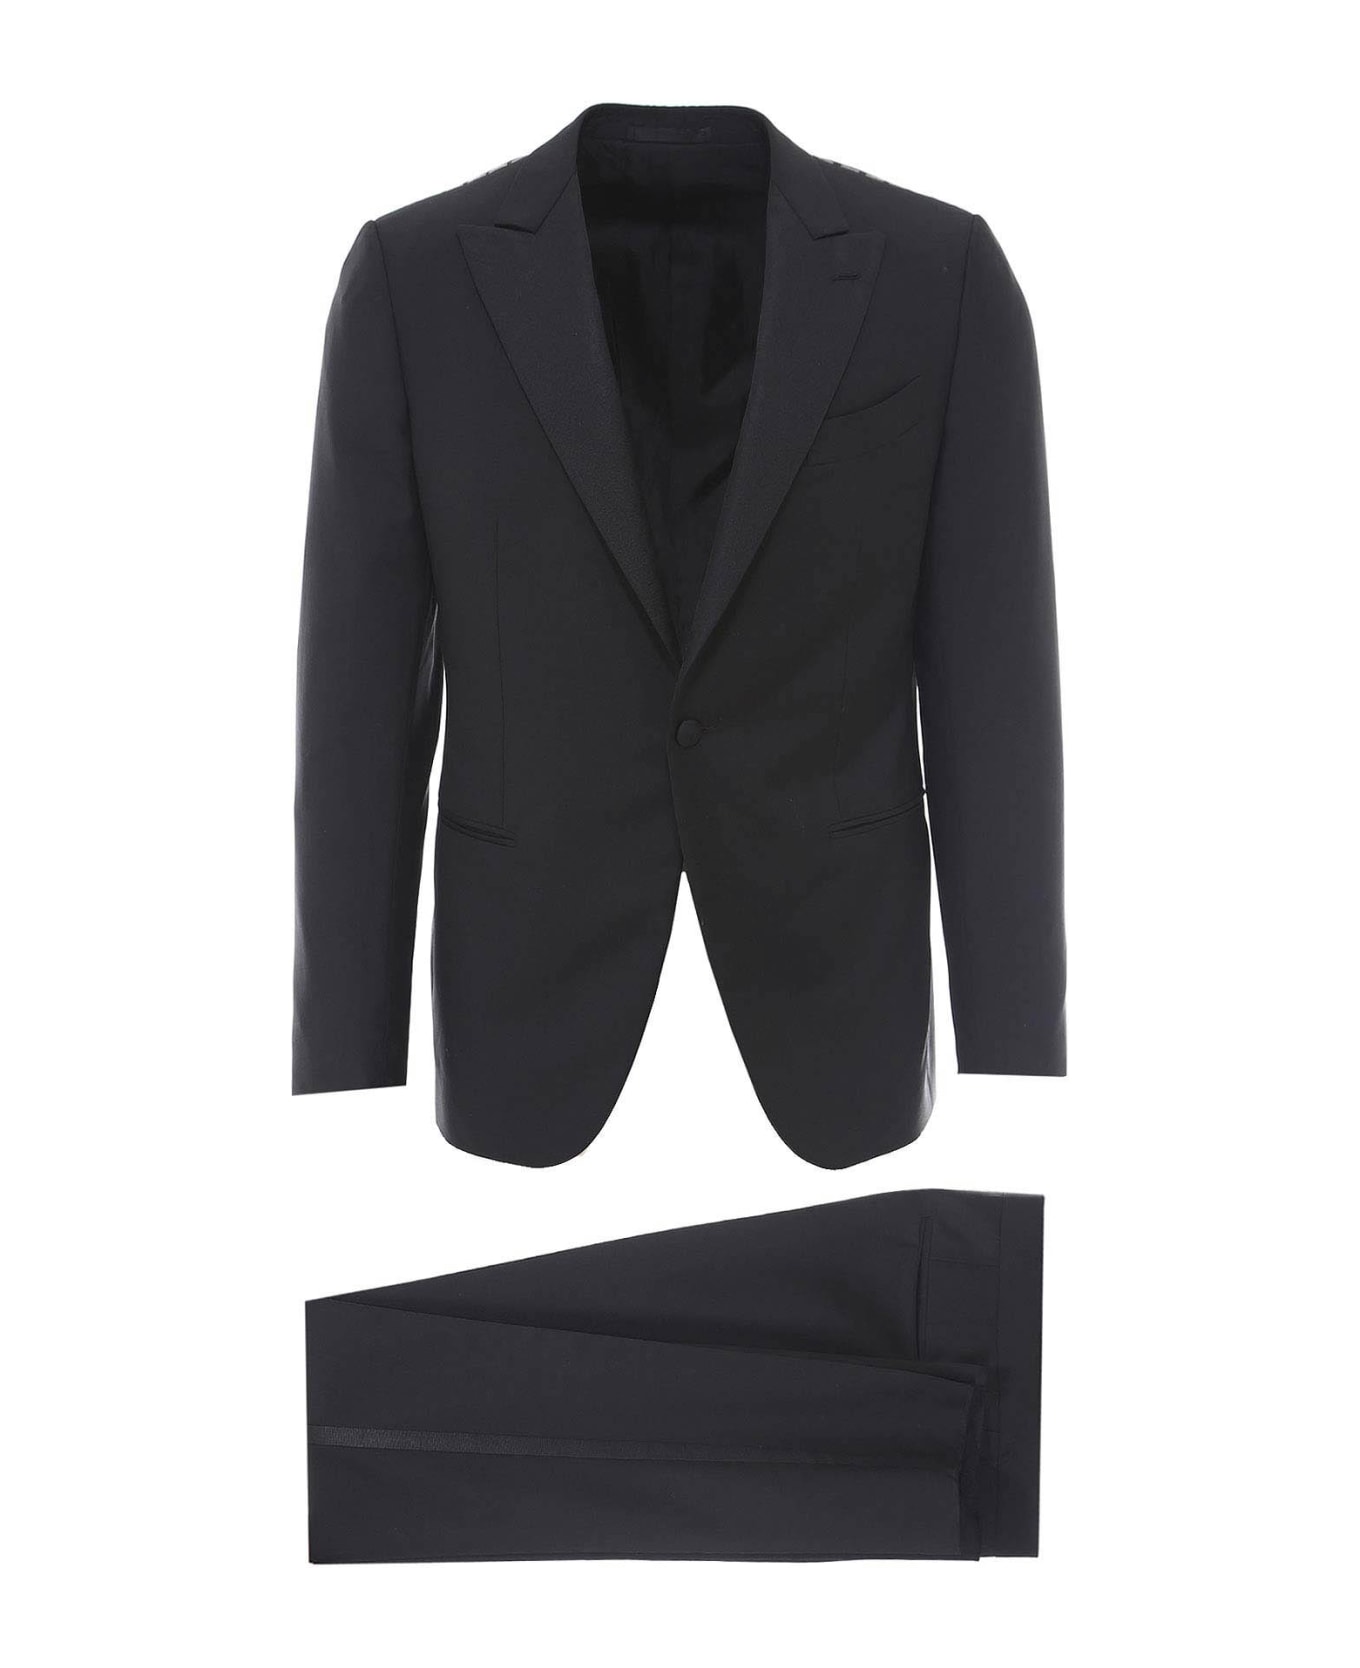 Caruso Suit - Black スーツ